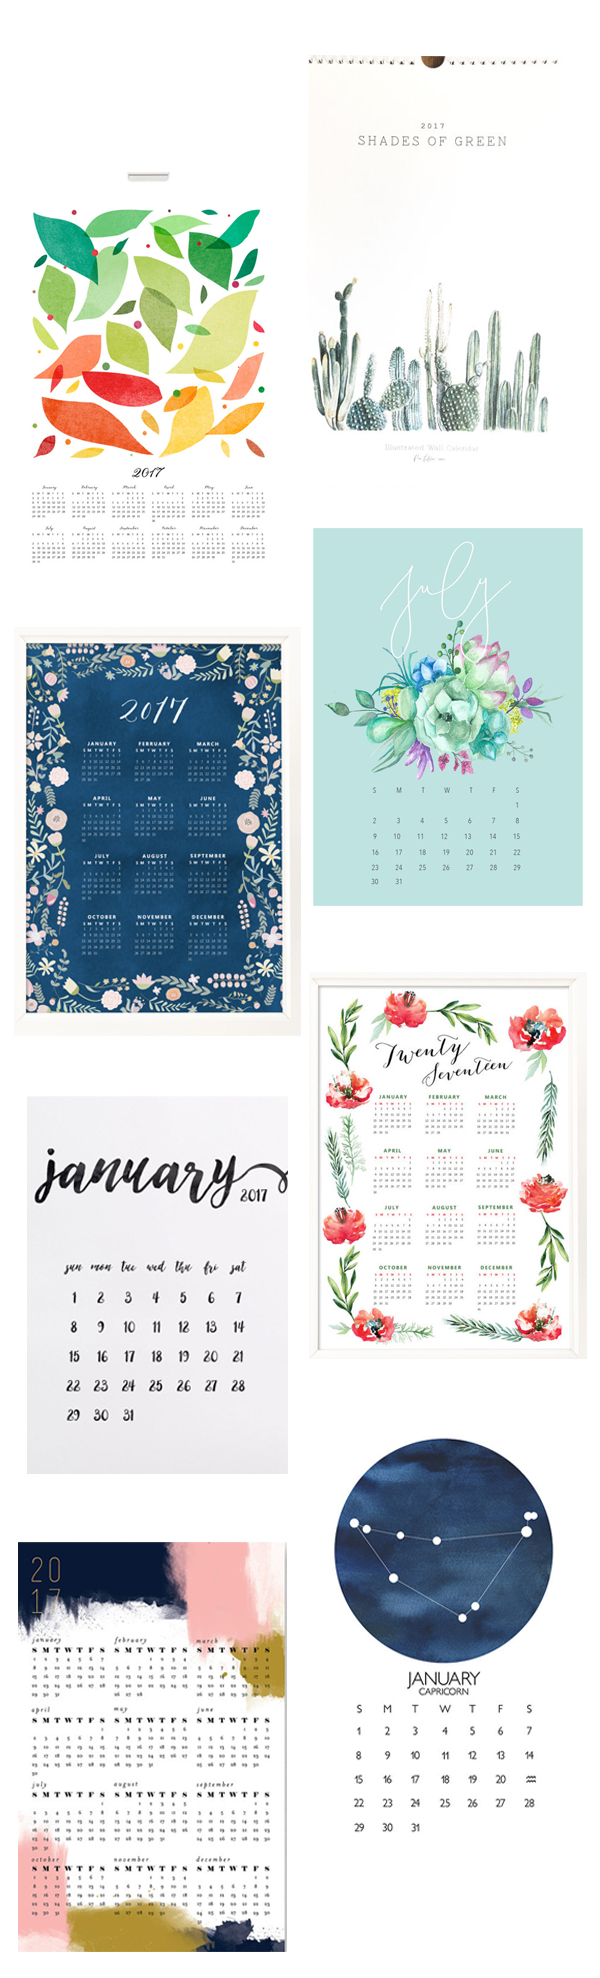 2017 Wall Calendars